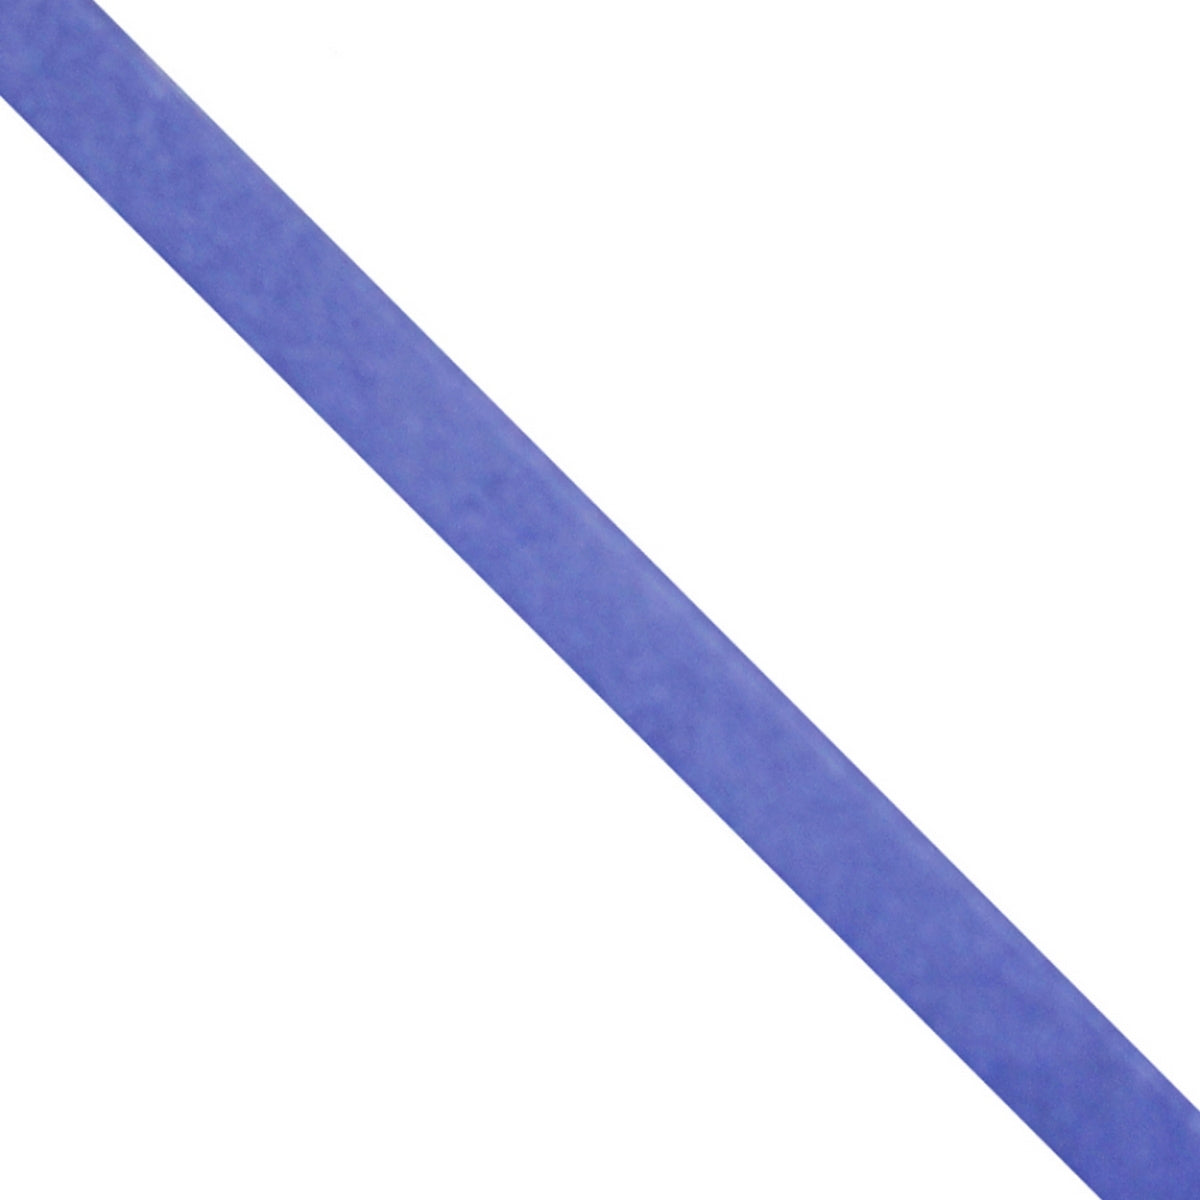 jags-mumbai Qilling Paper Quilling Strip 5mm Blue